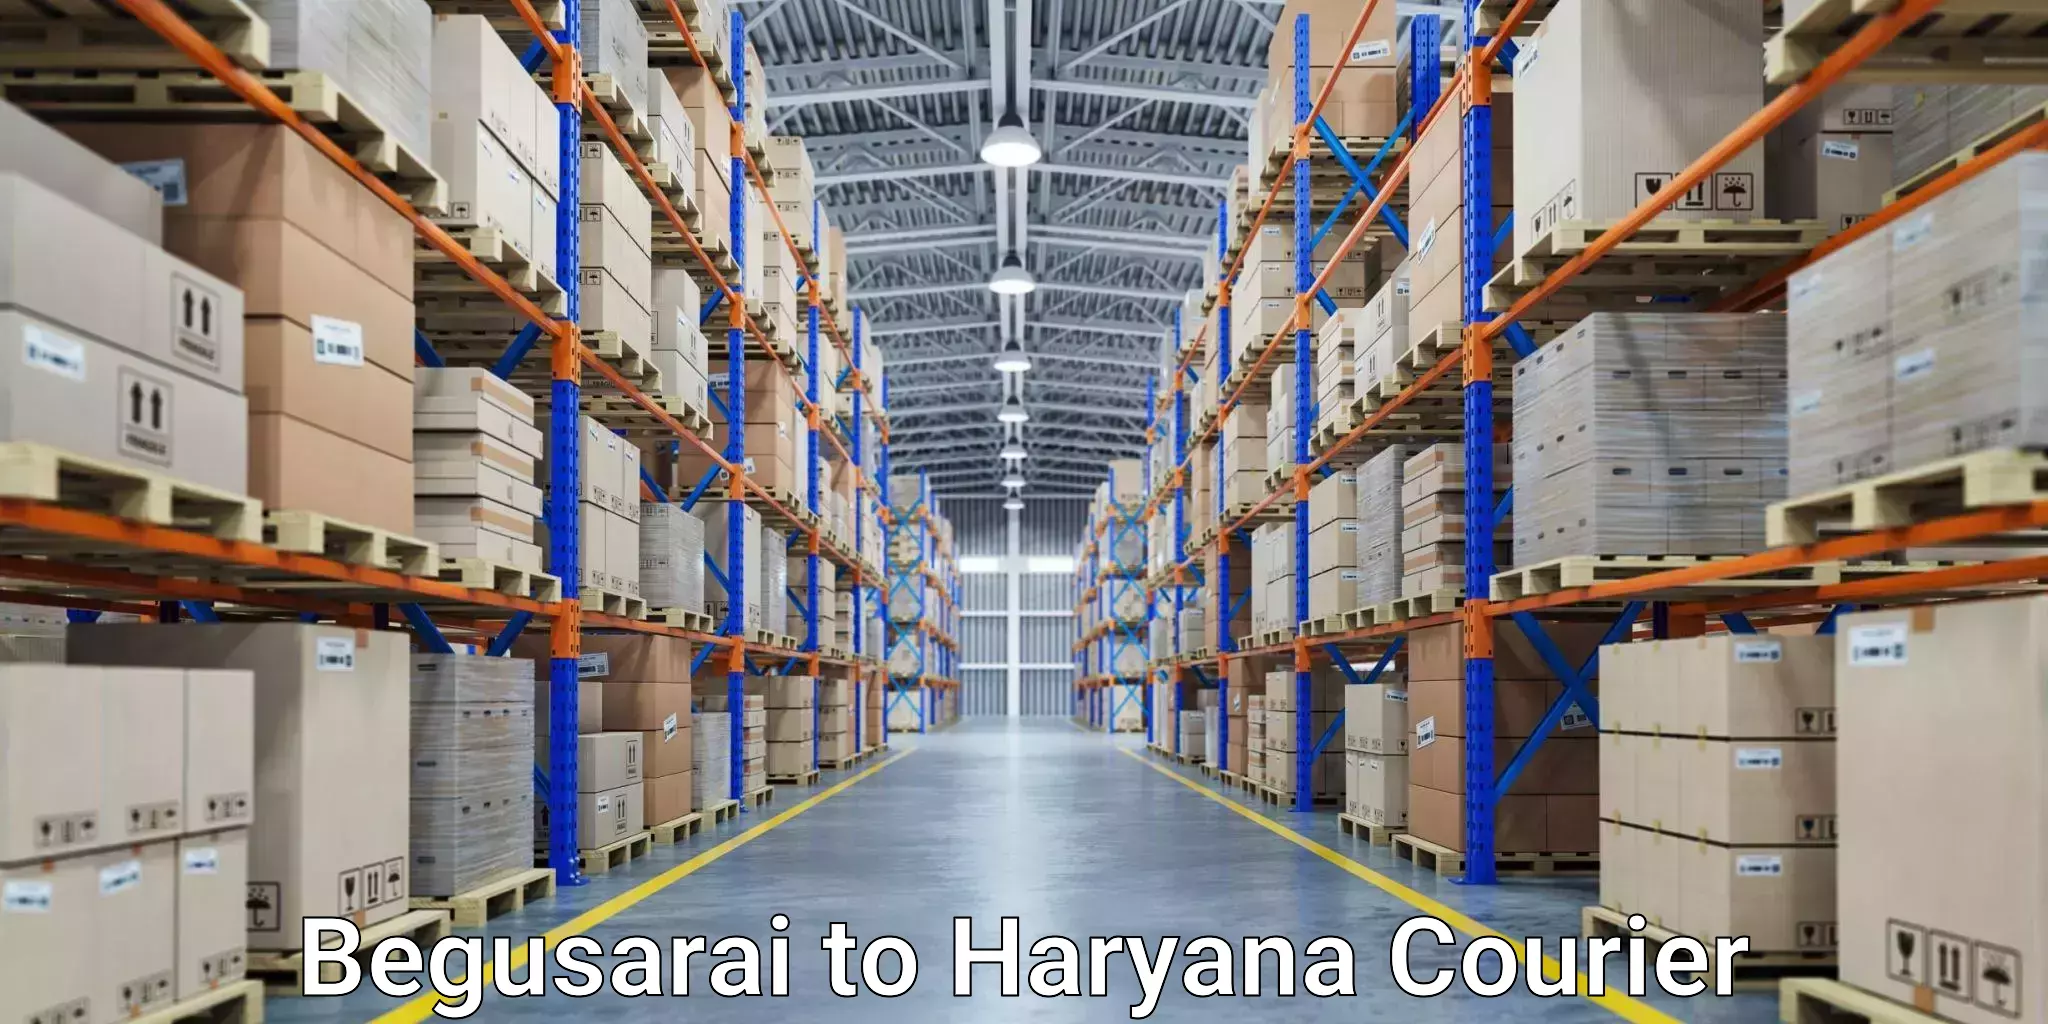 Courier service partnerships Begusarai to Gurgaon